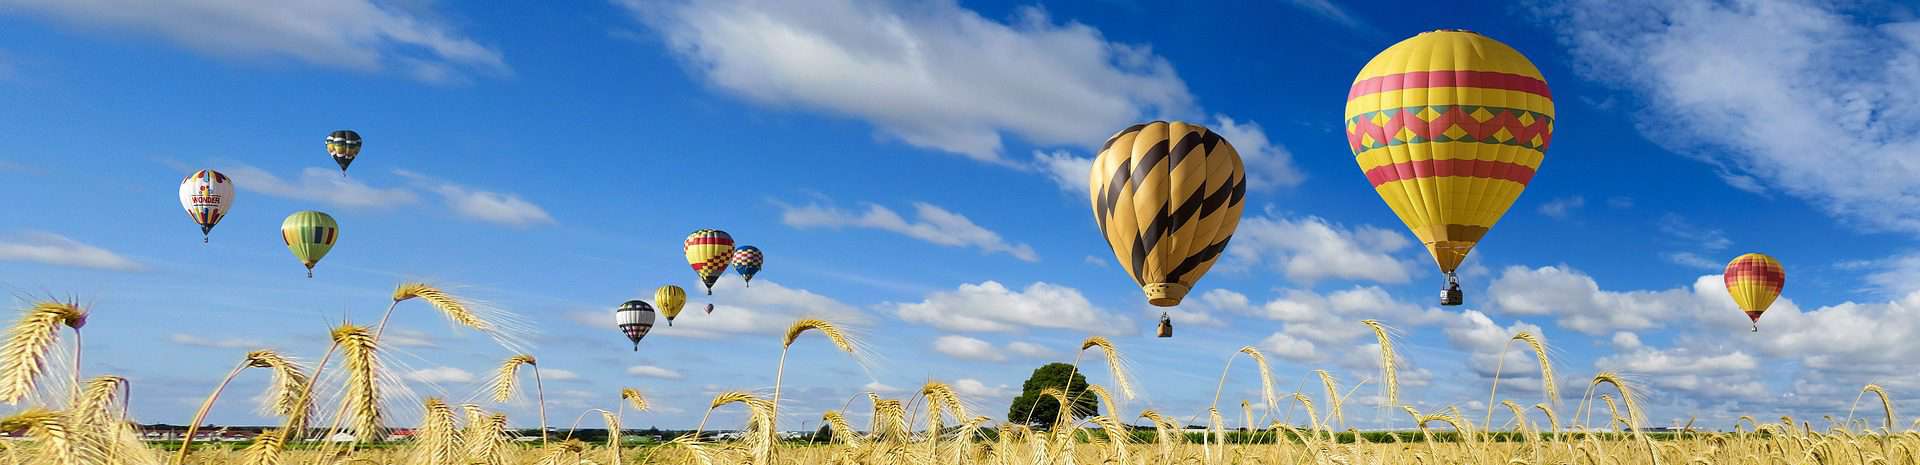 Balloons in Field